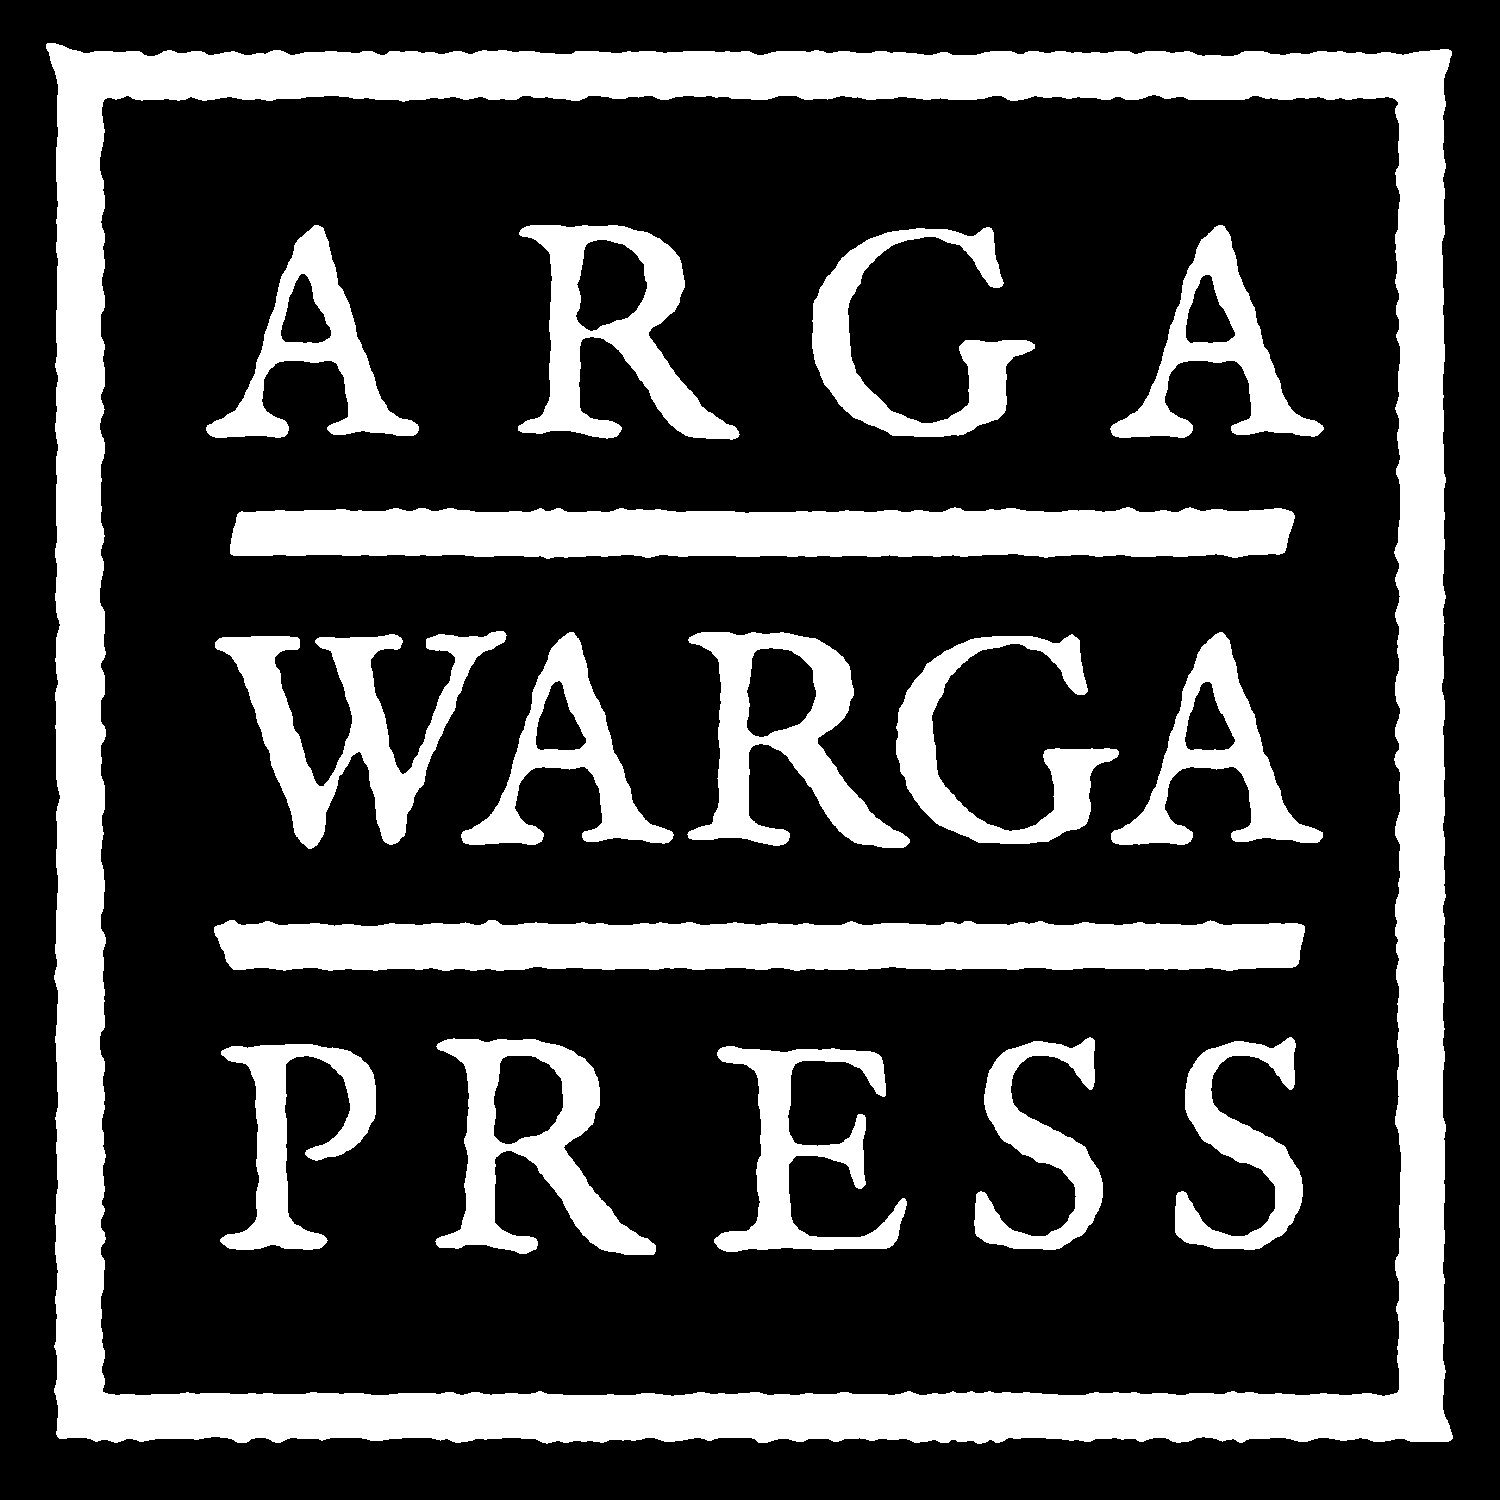 (c) Argawargapress.wordpress.com